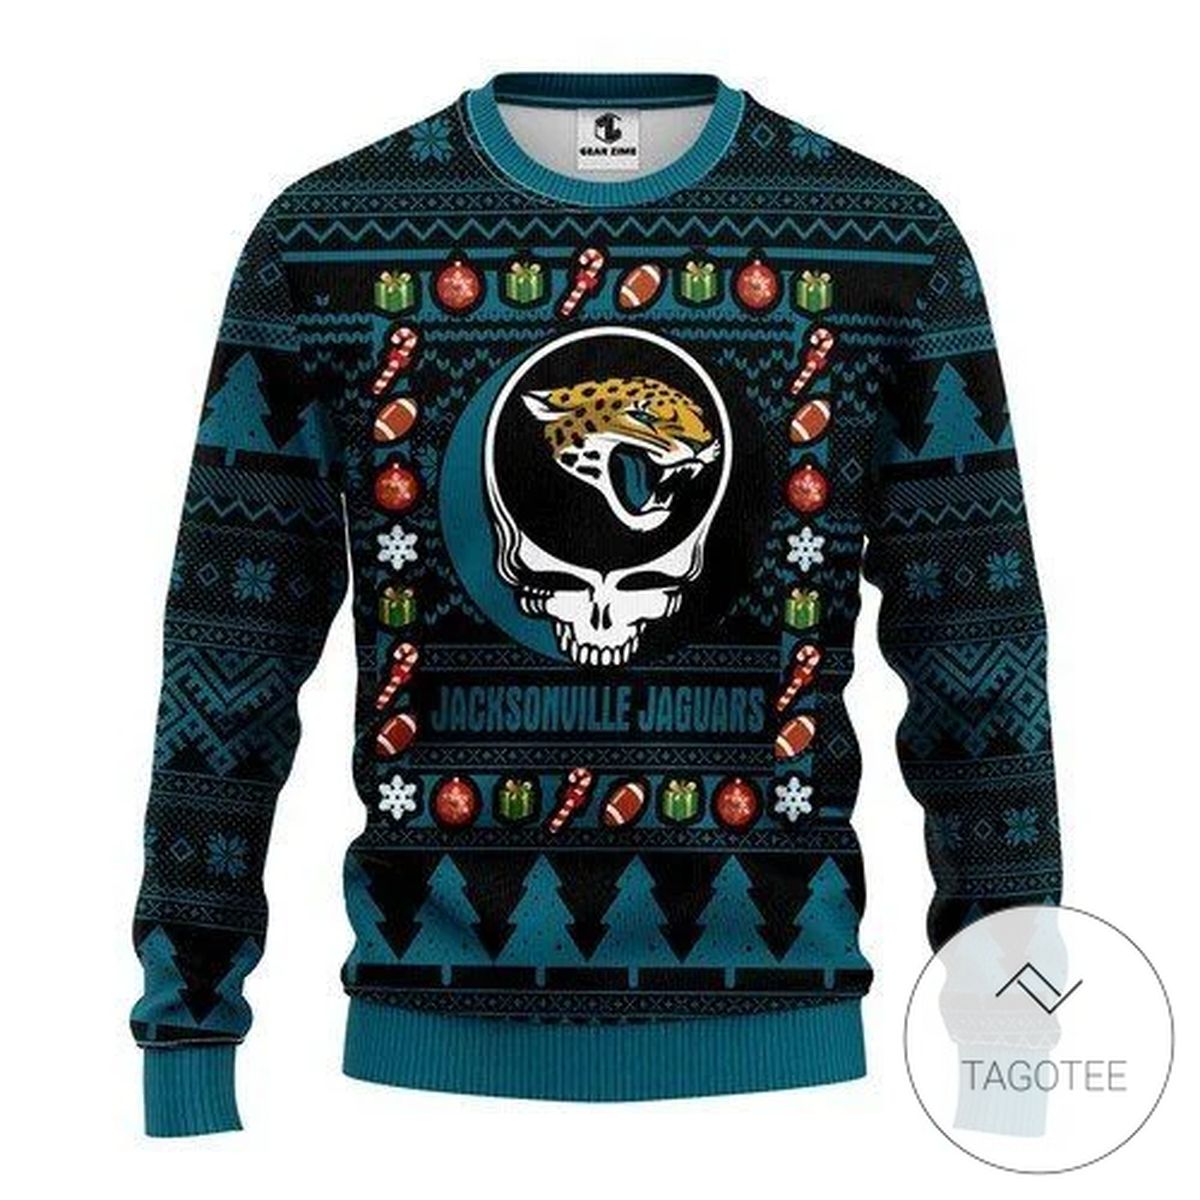 Jacksonville Jaguars Grateful Dead For Unisex Sweatshirt Knitted Ugly Christmas Sweater